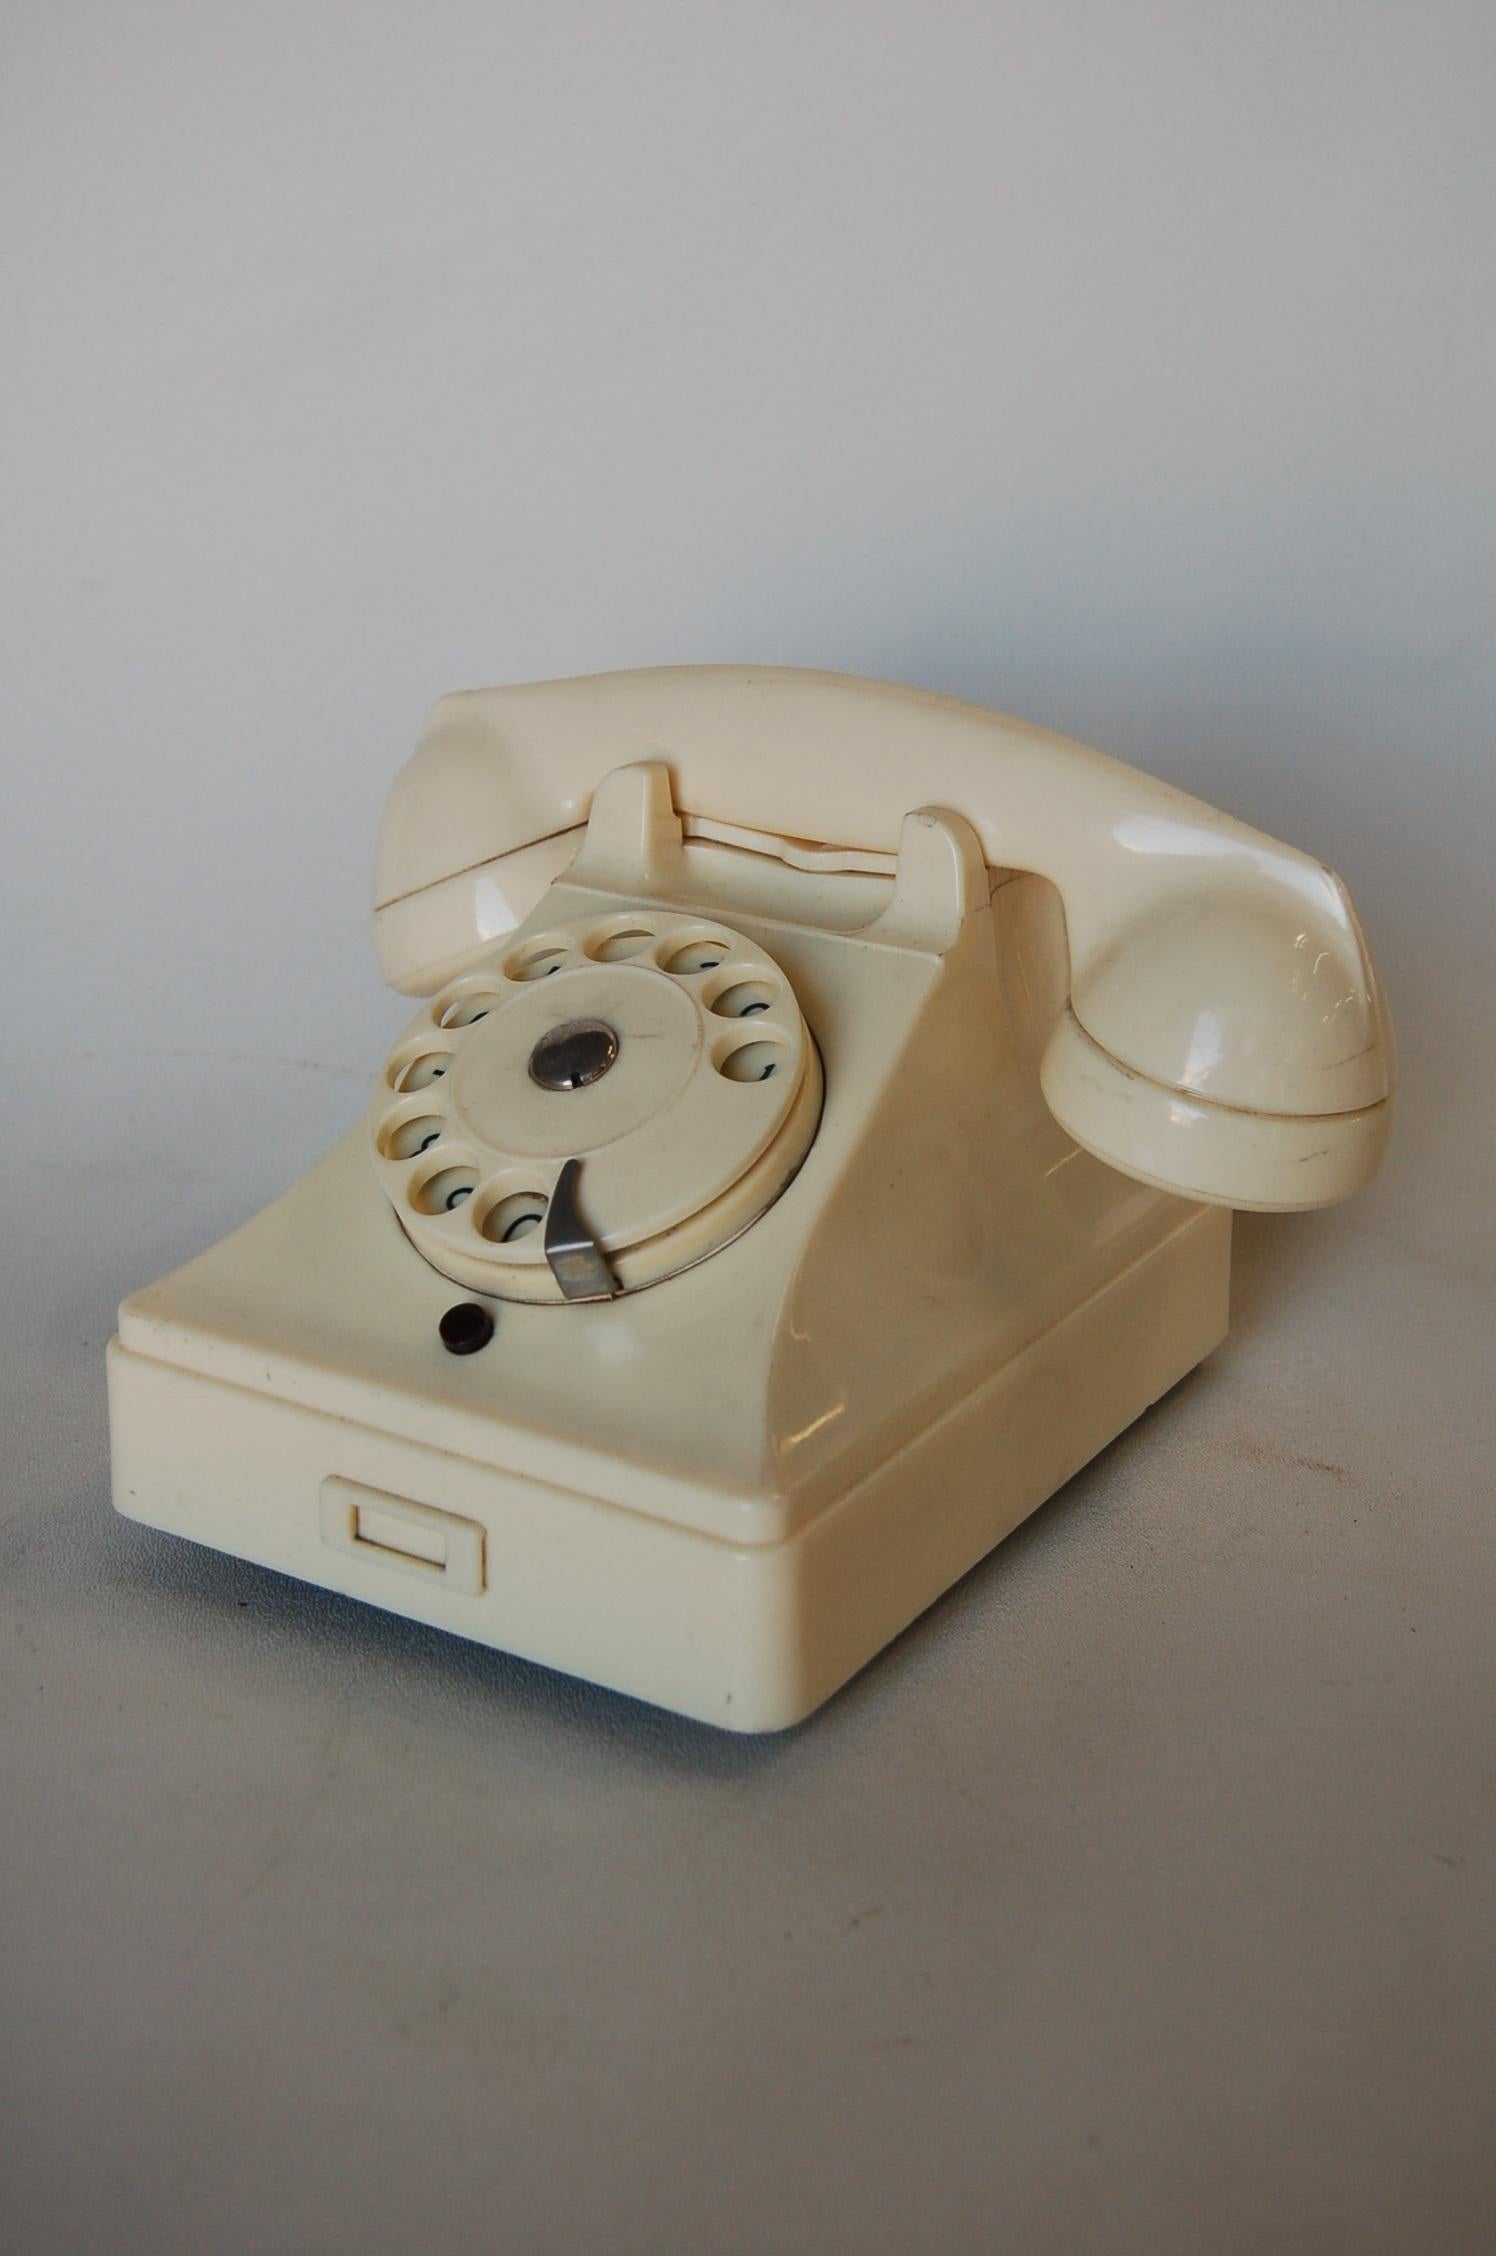 Vintage white Swedish Bakelite rotary table phone by Ericsson, circa 1950. 

Measures 6